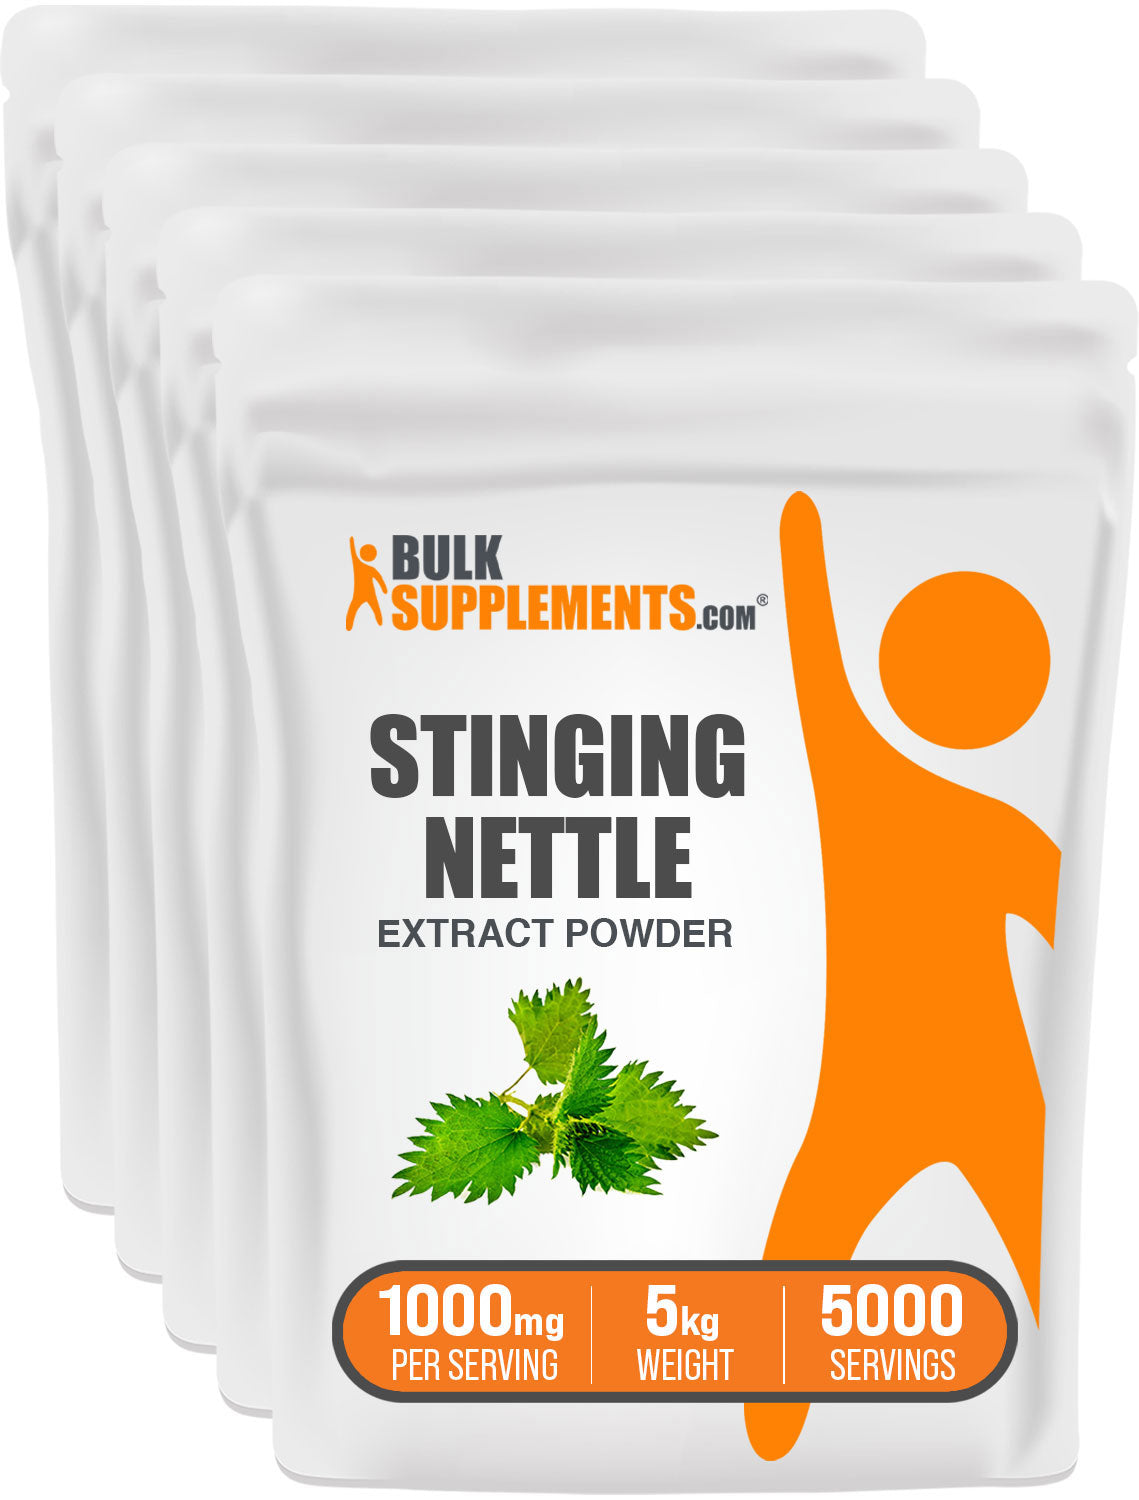 BulkSupplements.com Stinging Nettle Extract Powder 5kg bag